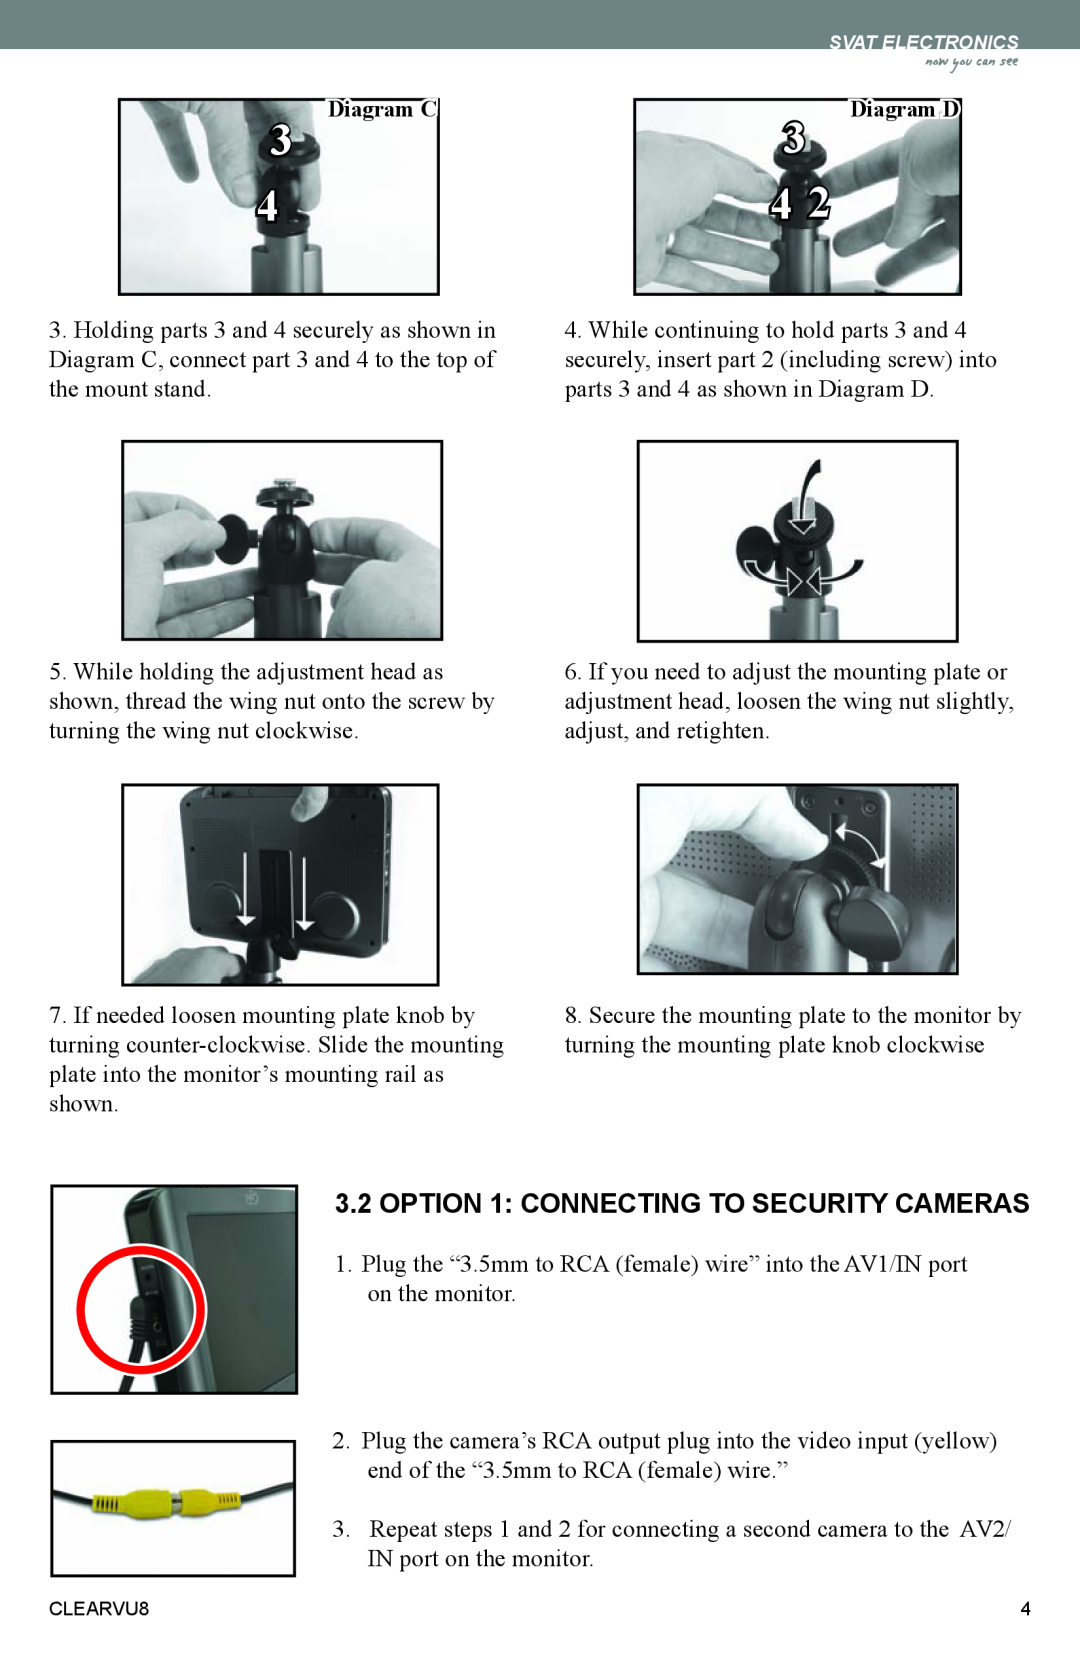 SVAT Electronics CLEARVU8 instruction manual OPTION 1 CONNECTING TO SECURITY CAMERAS, Diagram C, Diagram D 